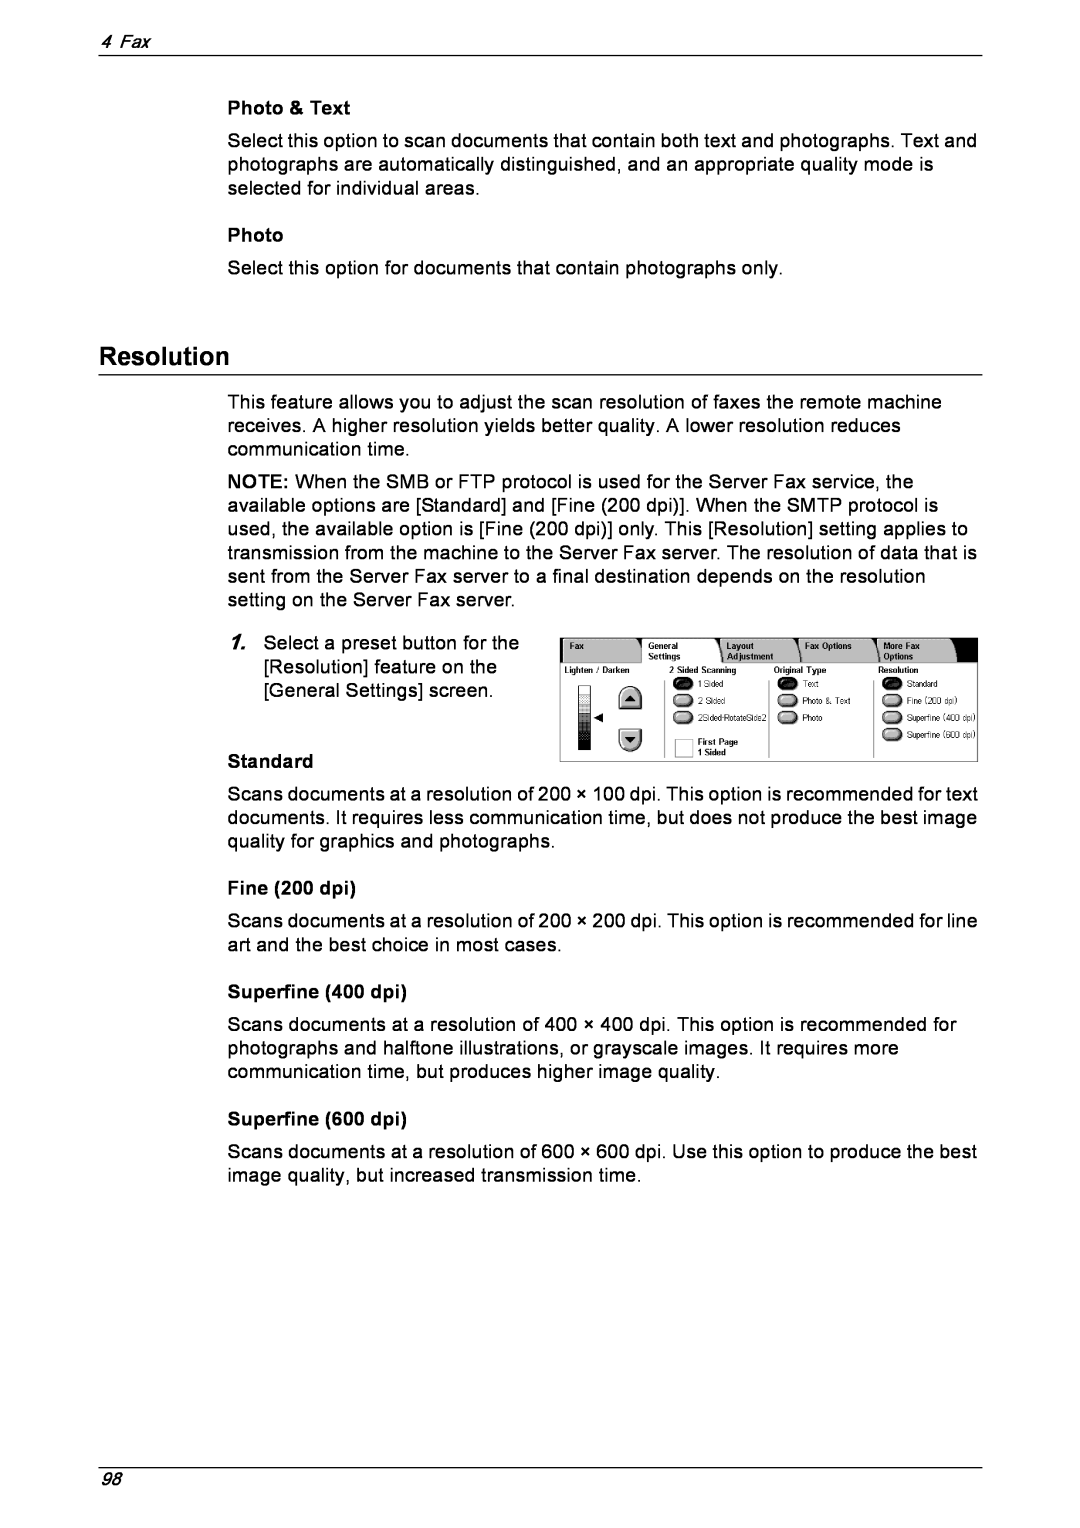 Xerox 5230 manual Resolution, Standard, Fine 200 dpi, Superfine 400 dpi, Superfine 600 dpi, Photo & Text 